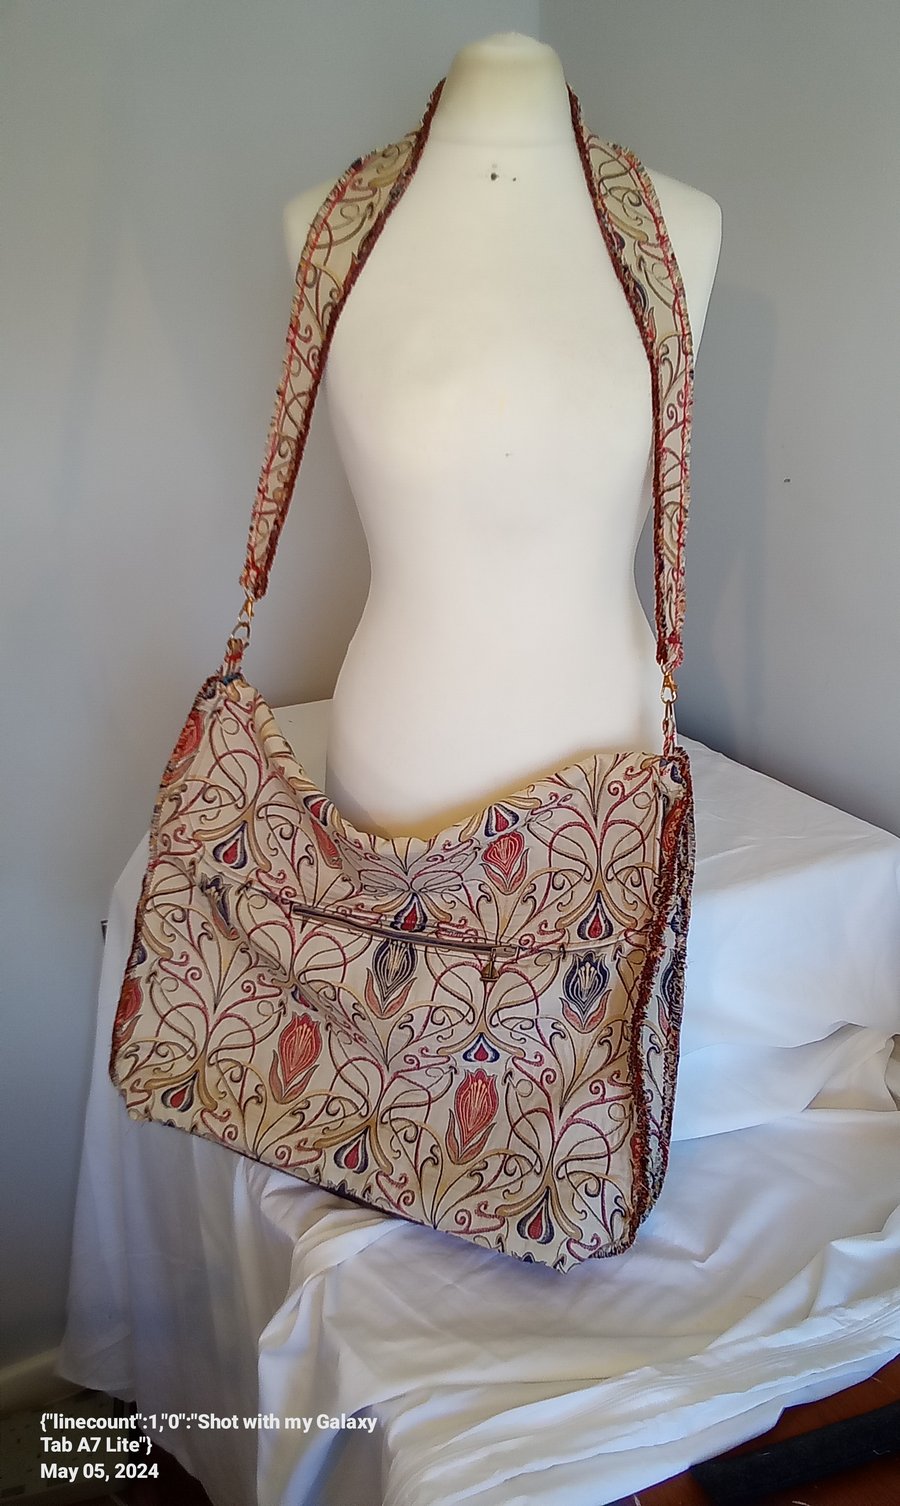 Hippy chick bohemian style satchel bag